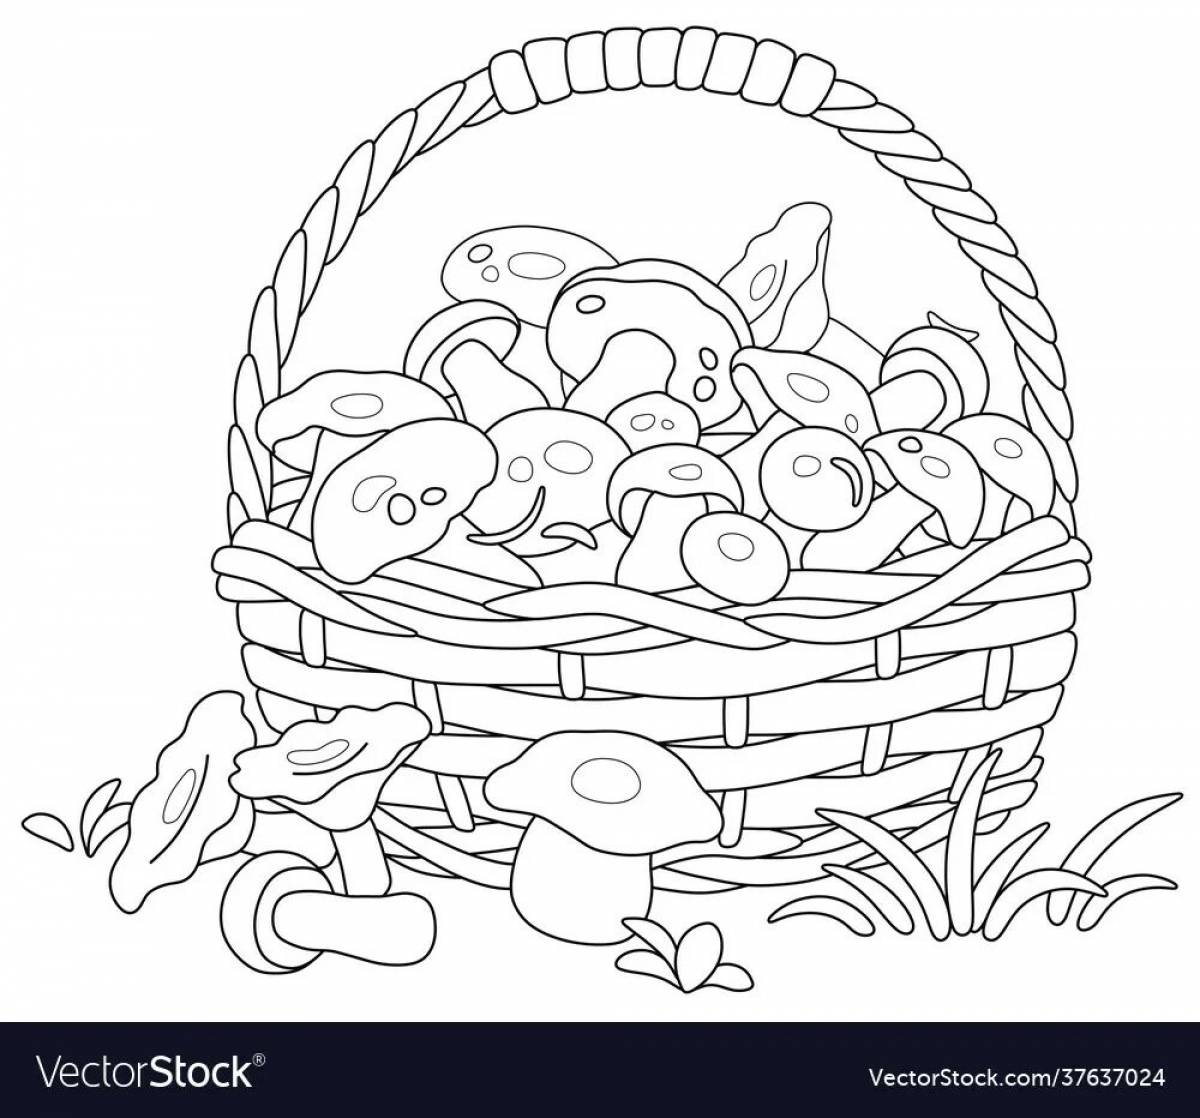 Basket with mushrooms #3